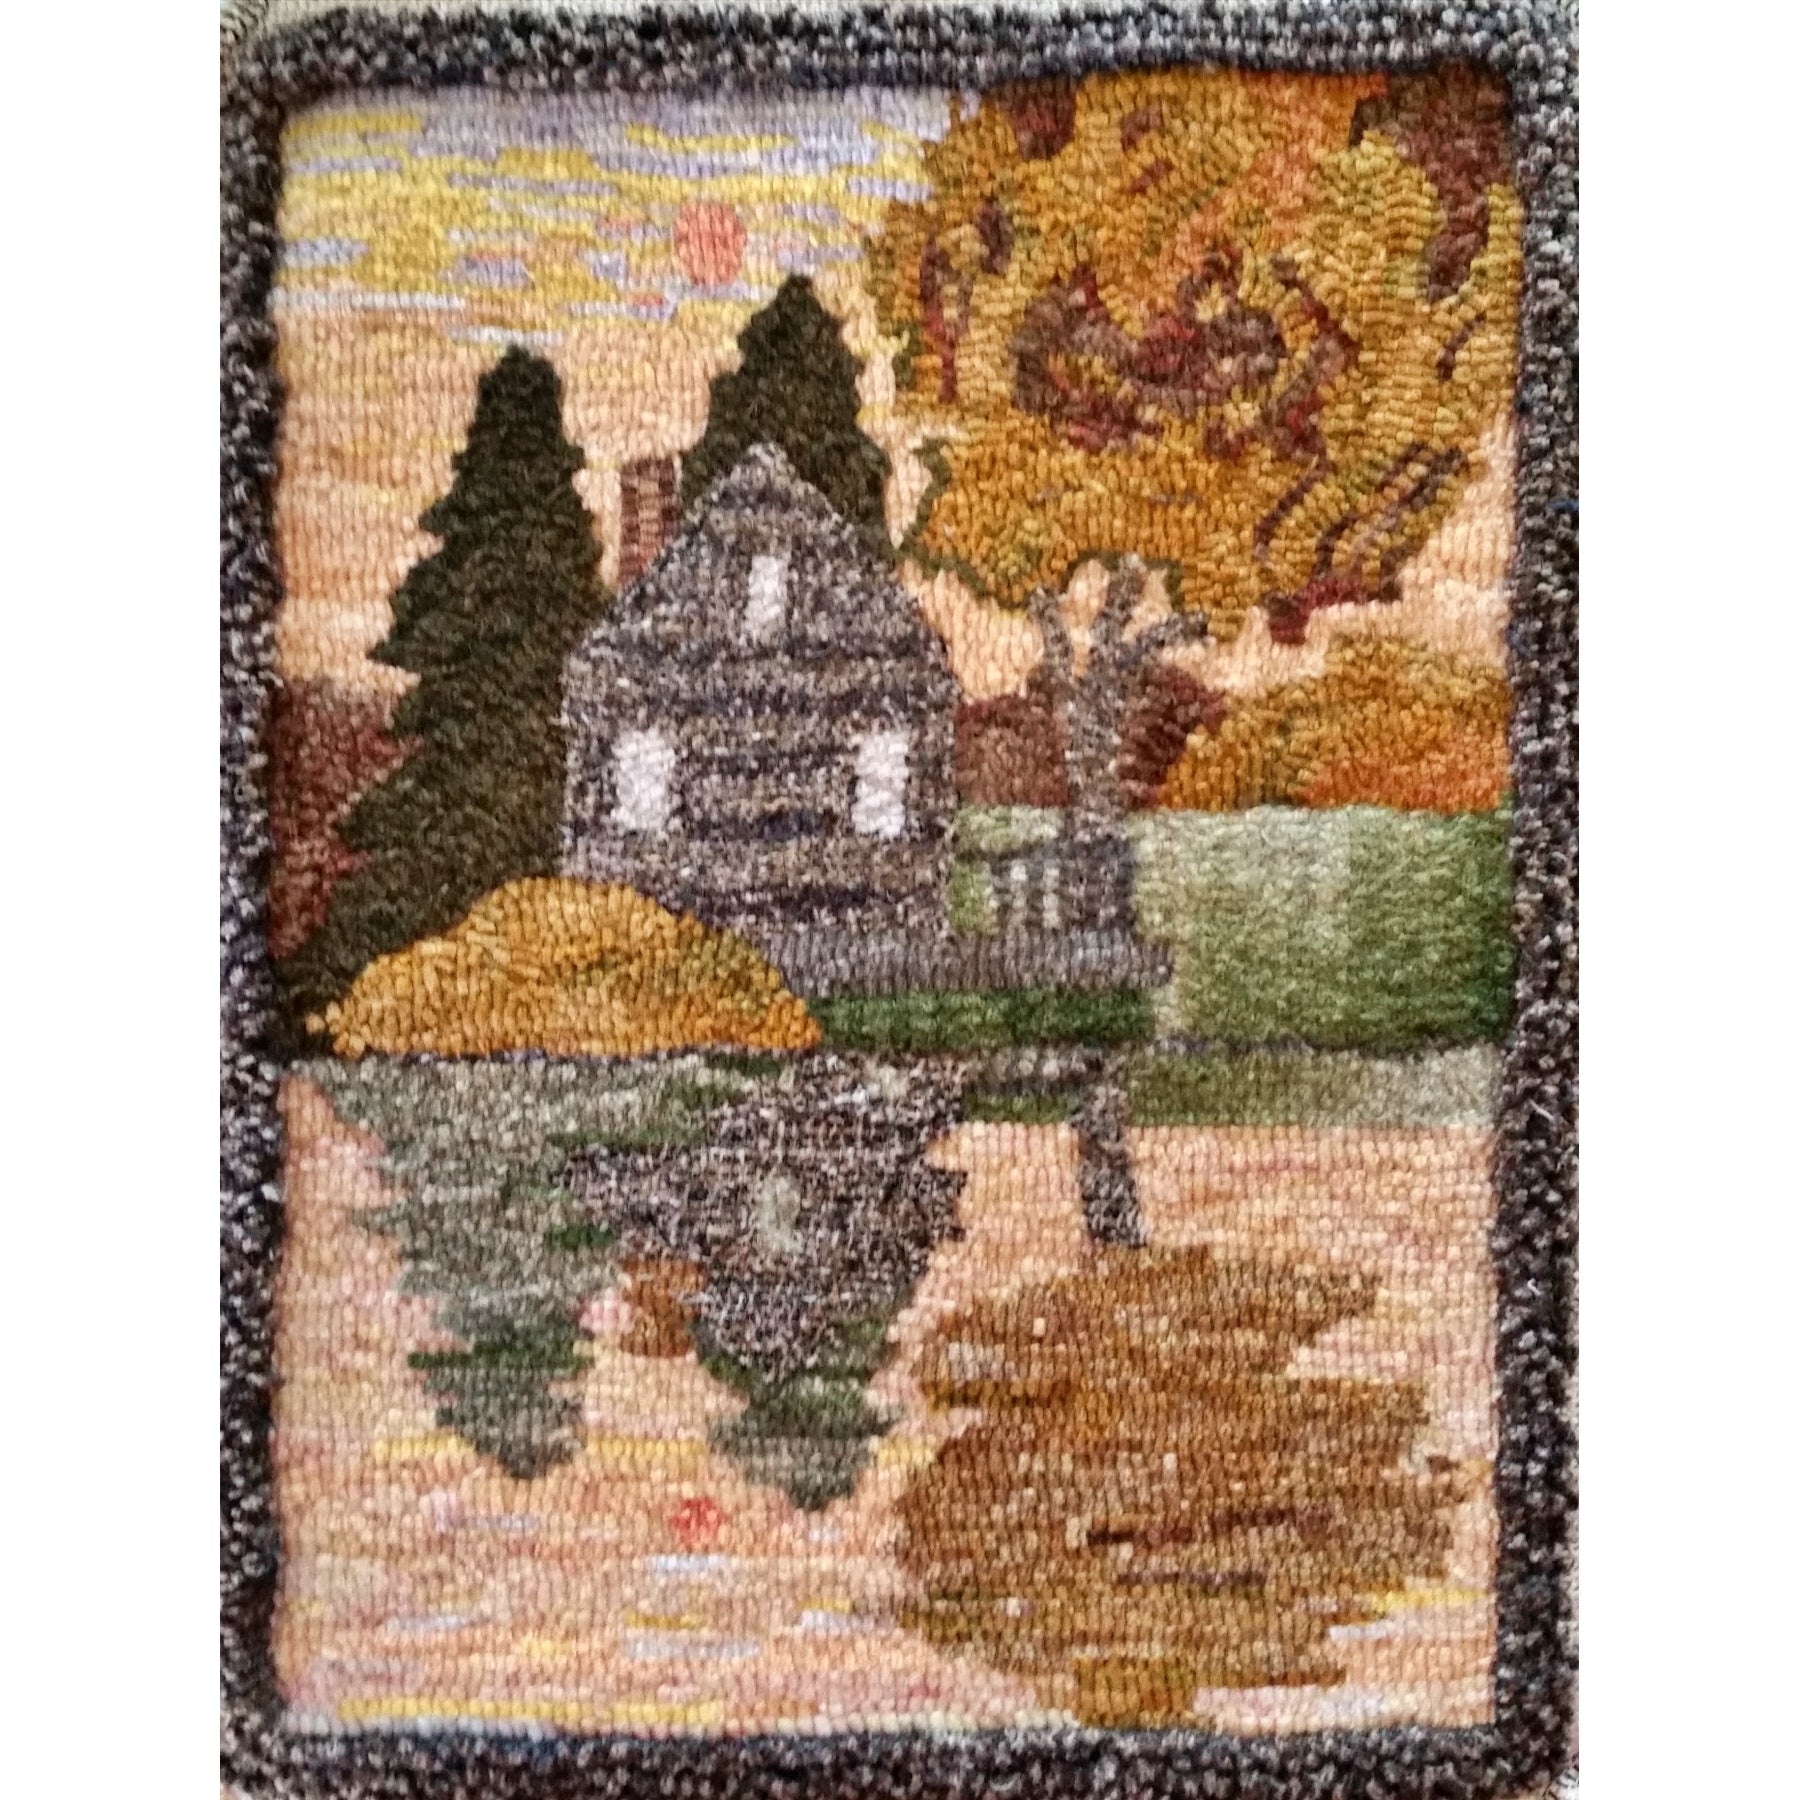 Daybreak, rug hooked by Nancy Gigrich